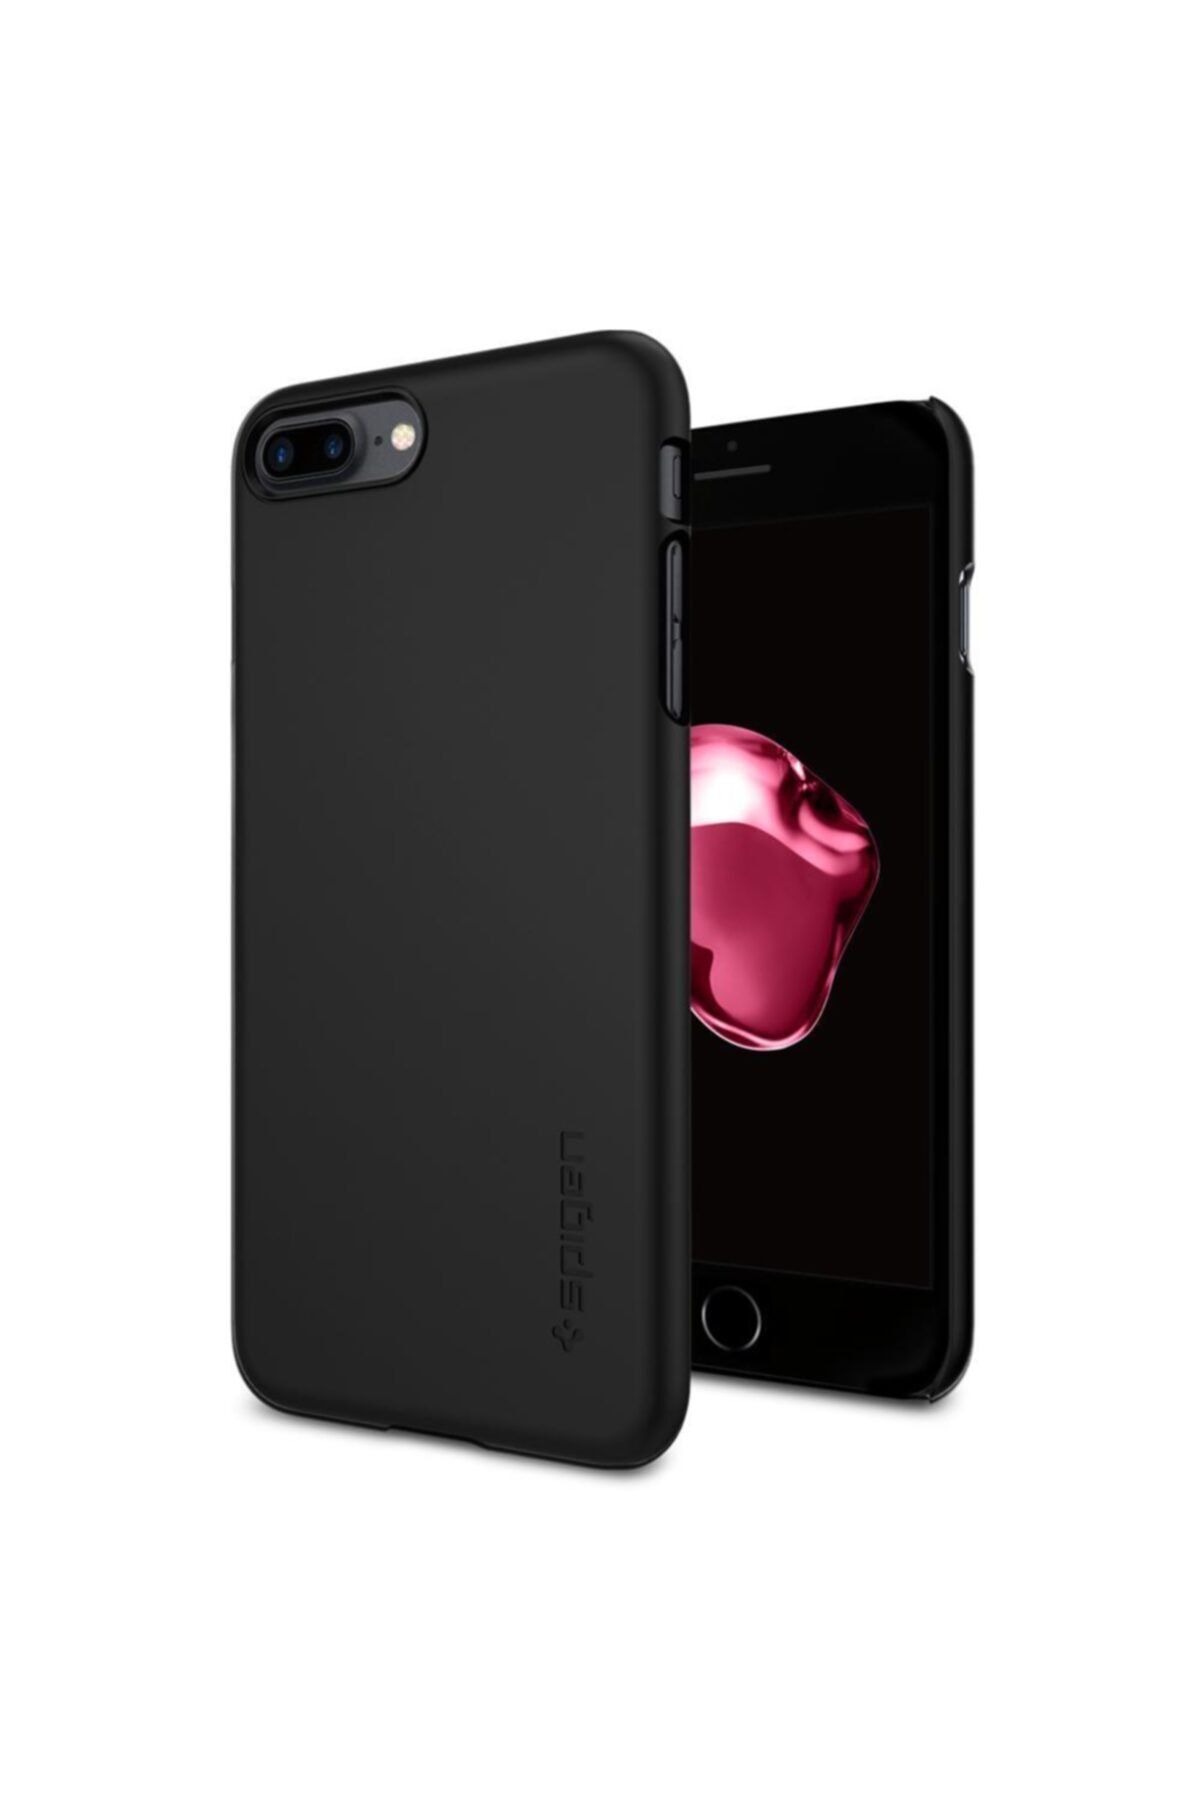 Spigen Iphone 7 Plus Kılıf Thin Fit Ultra Ince Black - 043cs20471